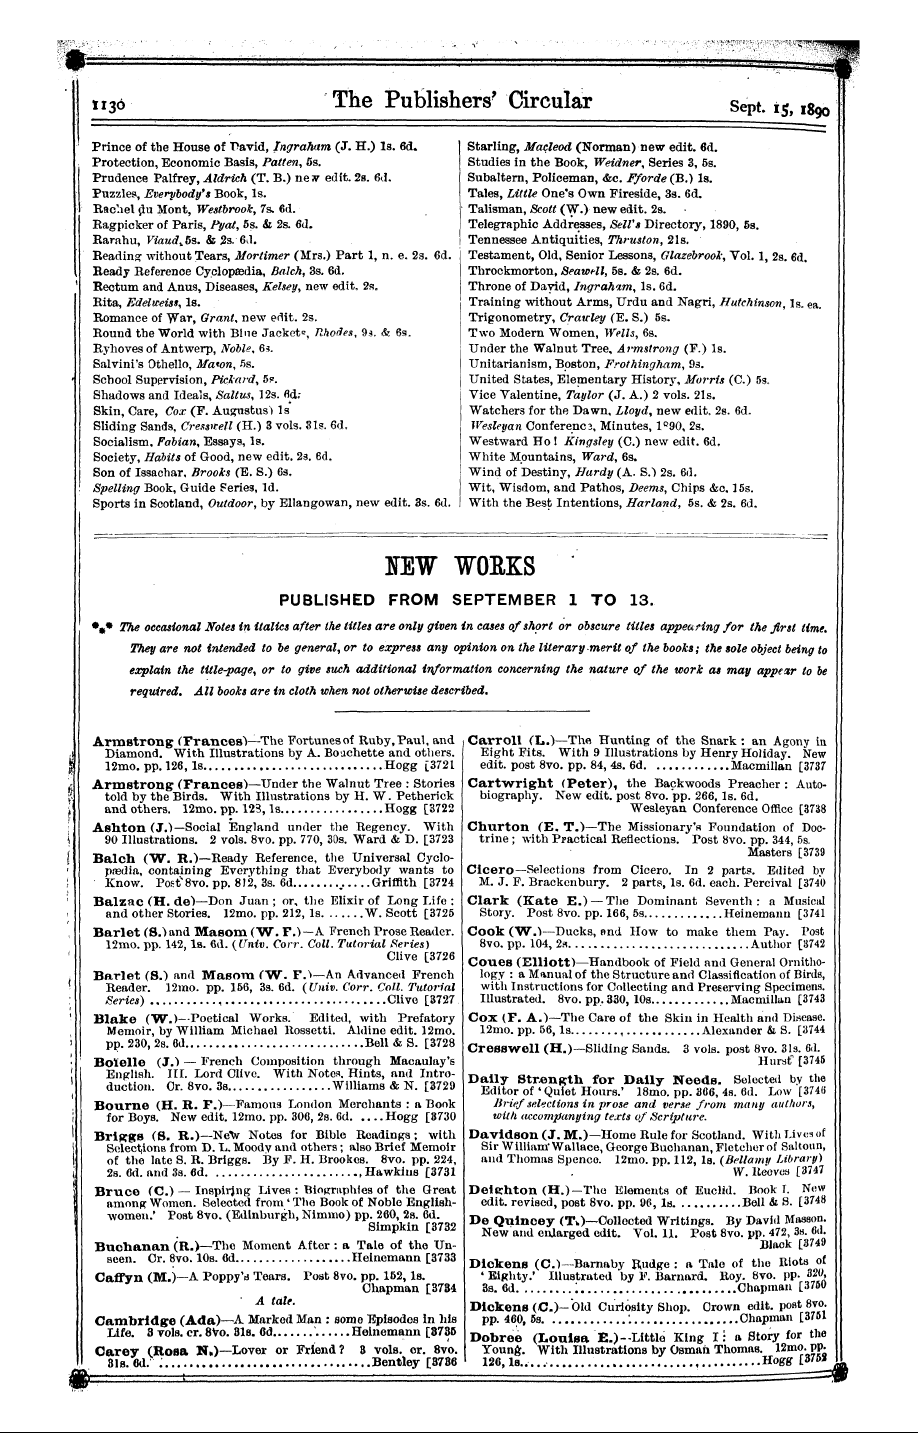 Publishers’ Circular (1880-1890): jS F Y, 1st edition: 22